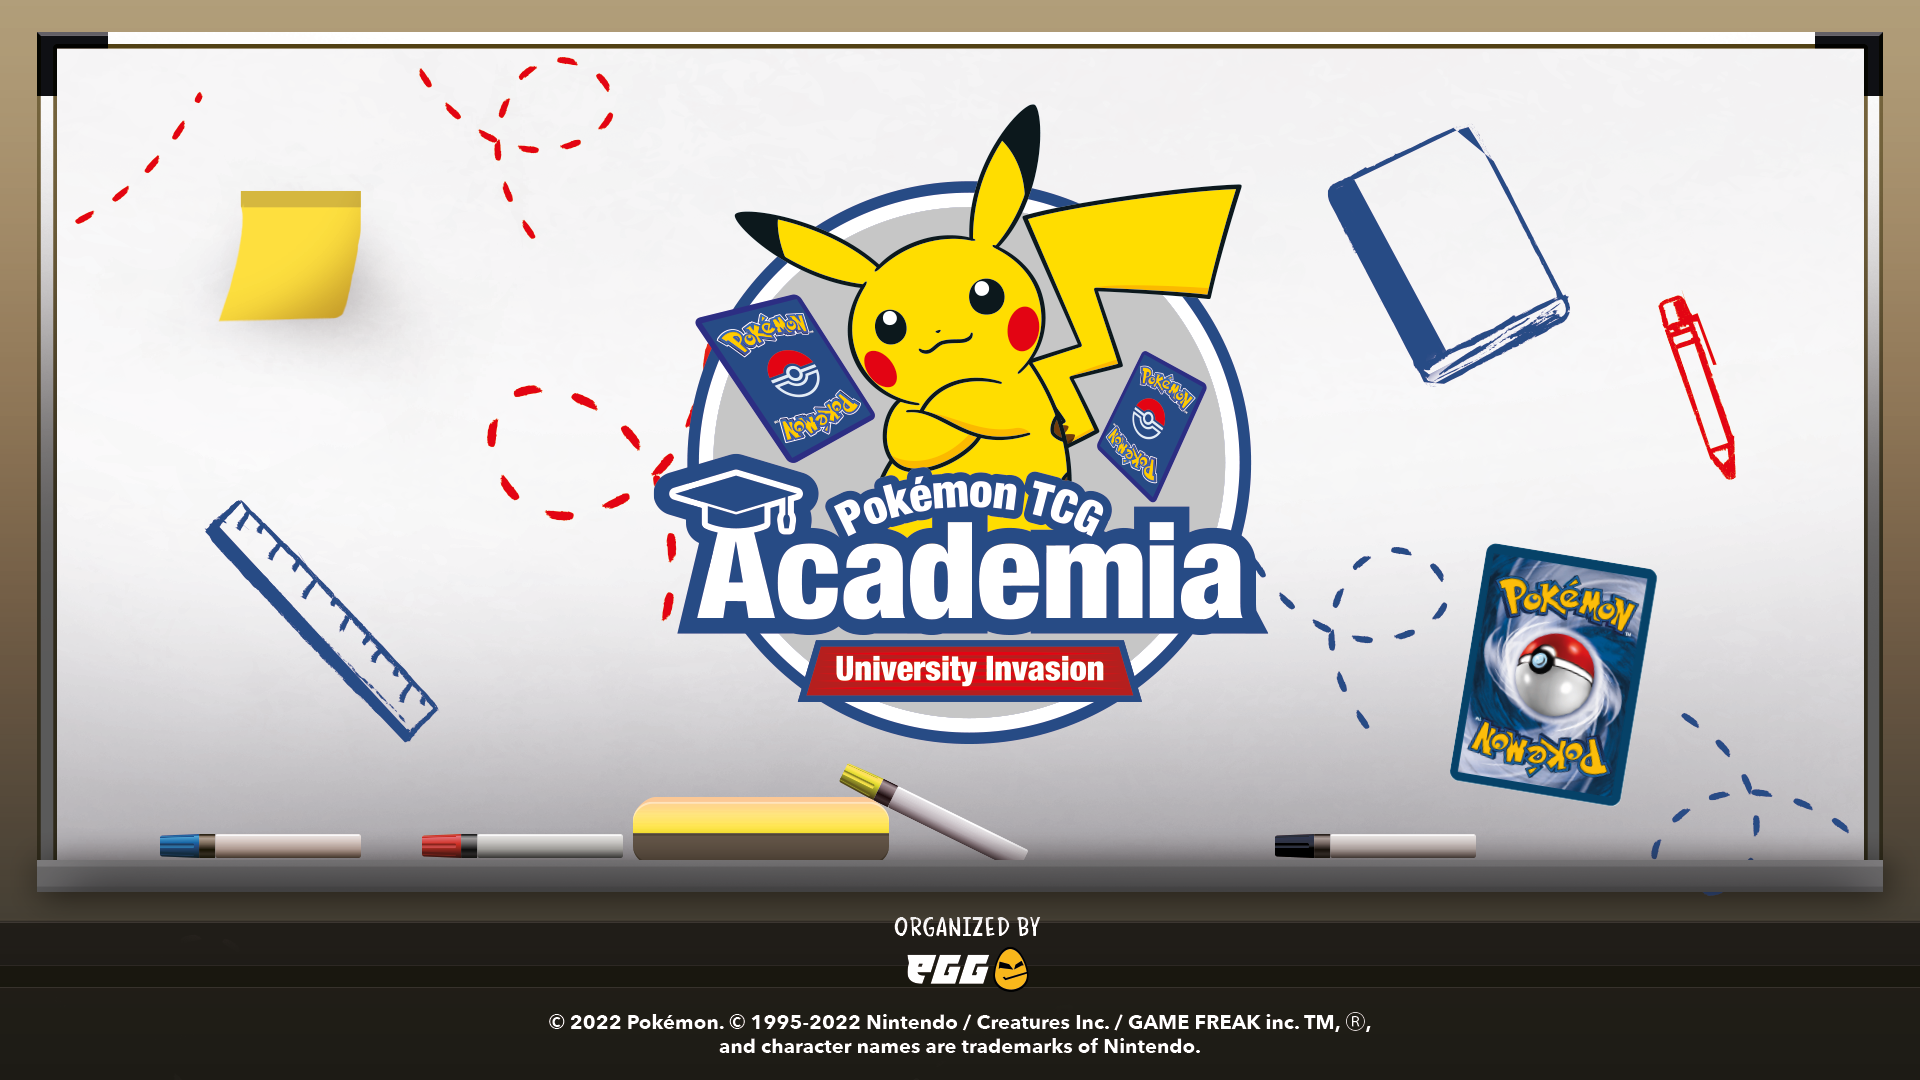 Pokémon TCG Academia University Invasion